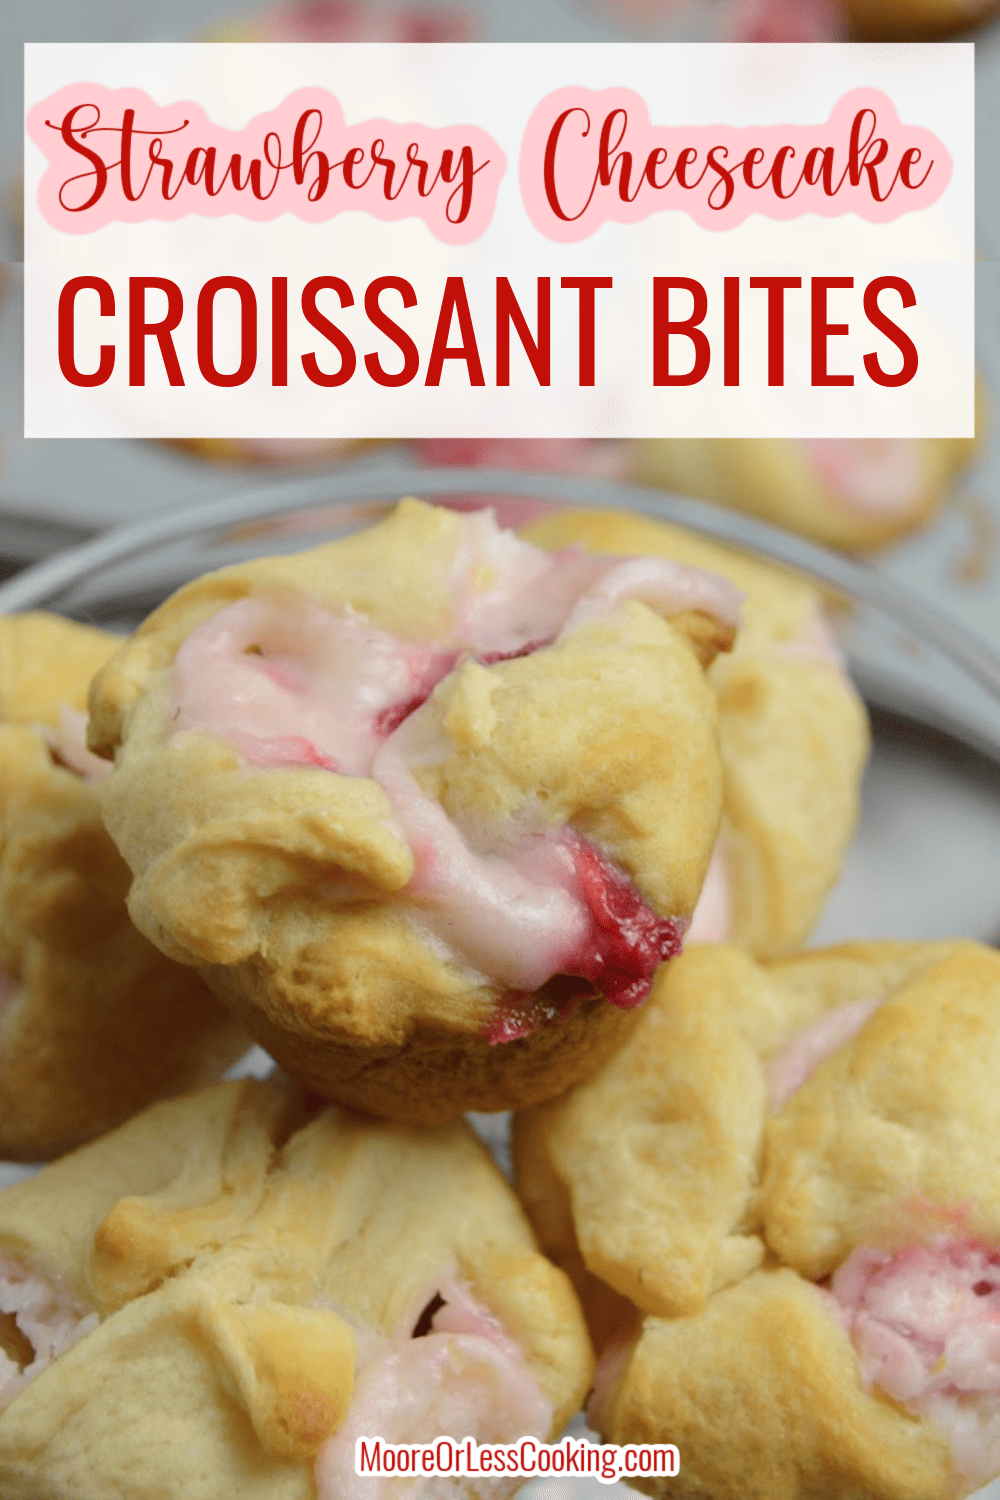 Strawberry Cheesecake Croissant Bites
